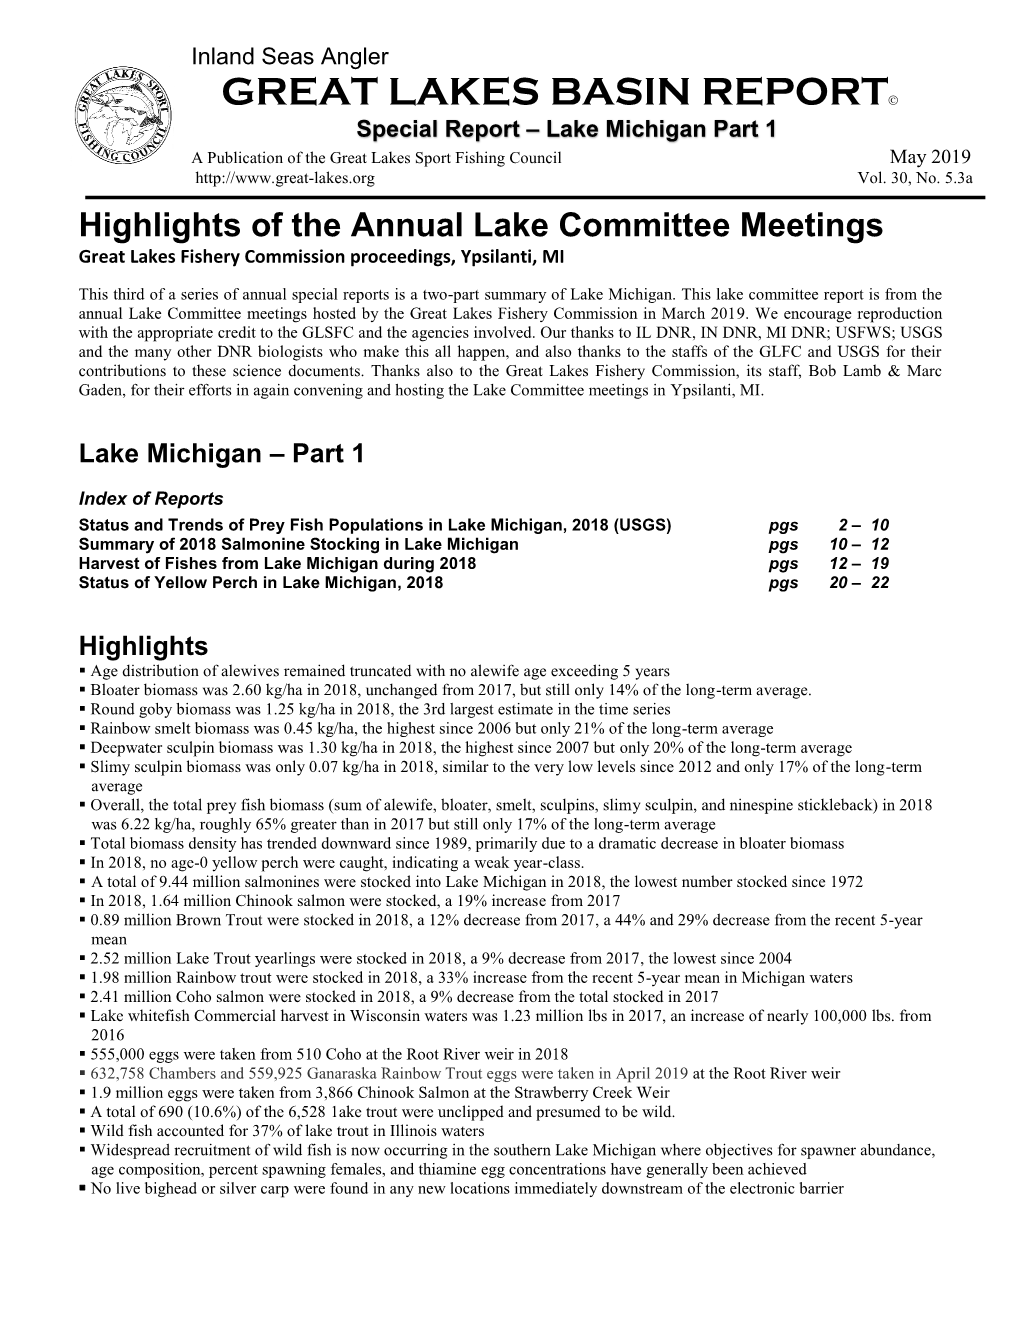 Lake Michigan Part 1 a Publication of the Great Lakes Sport Fishing Council May 2019 Vol